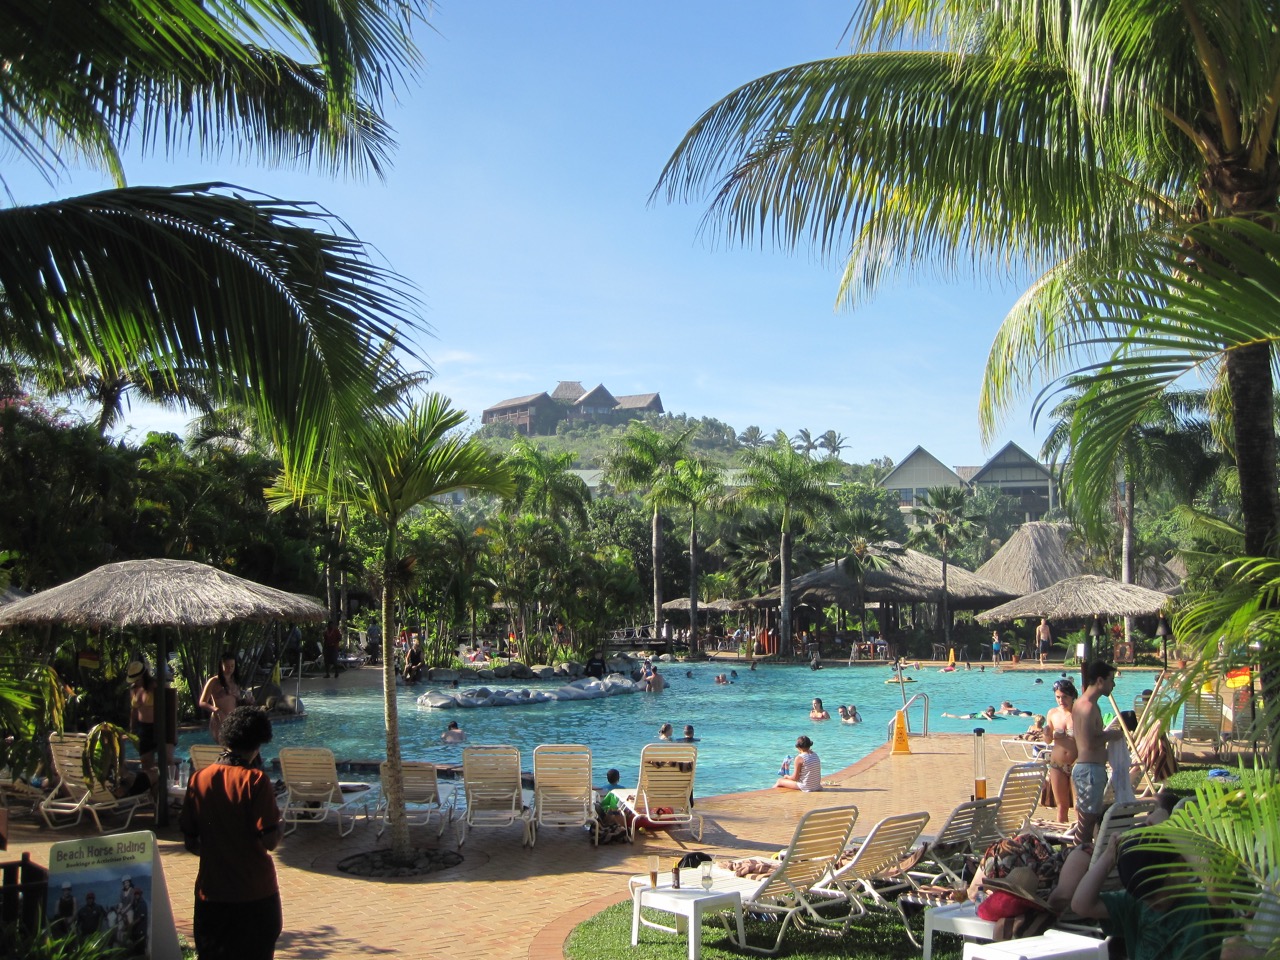 Fiji Sep 2012 – Day 2 – exploring the resort